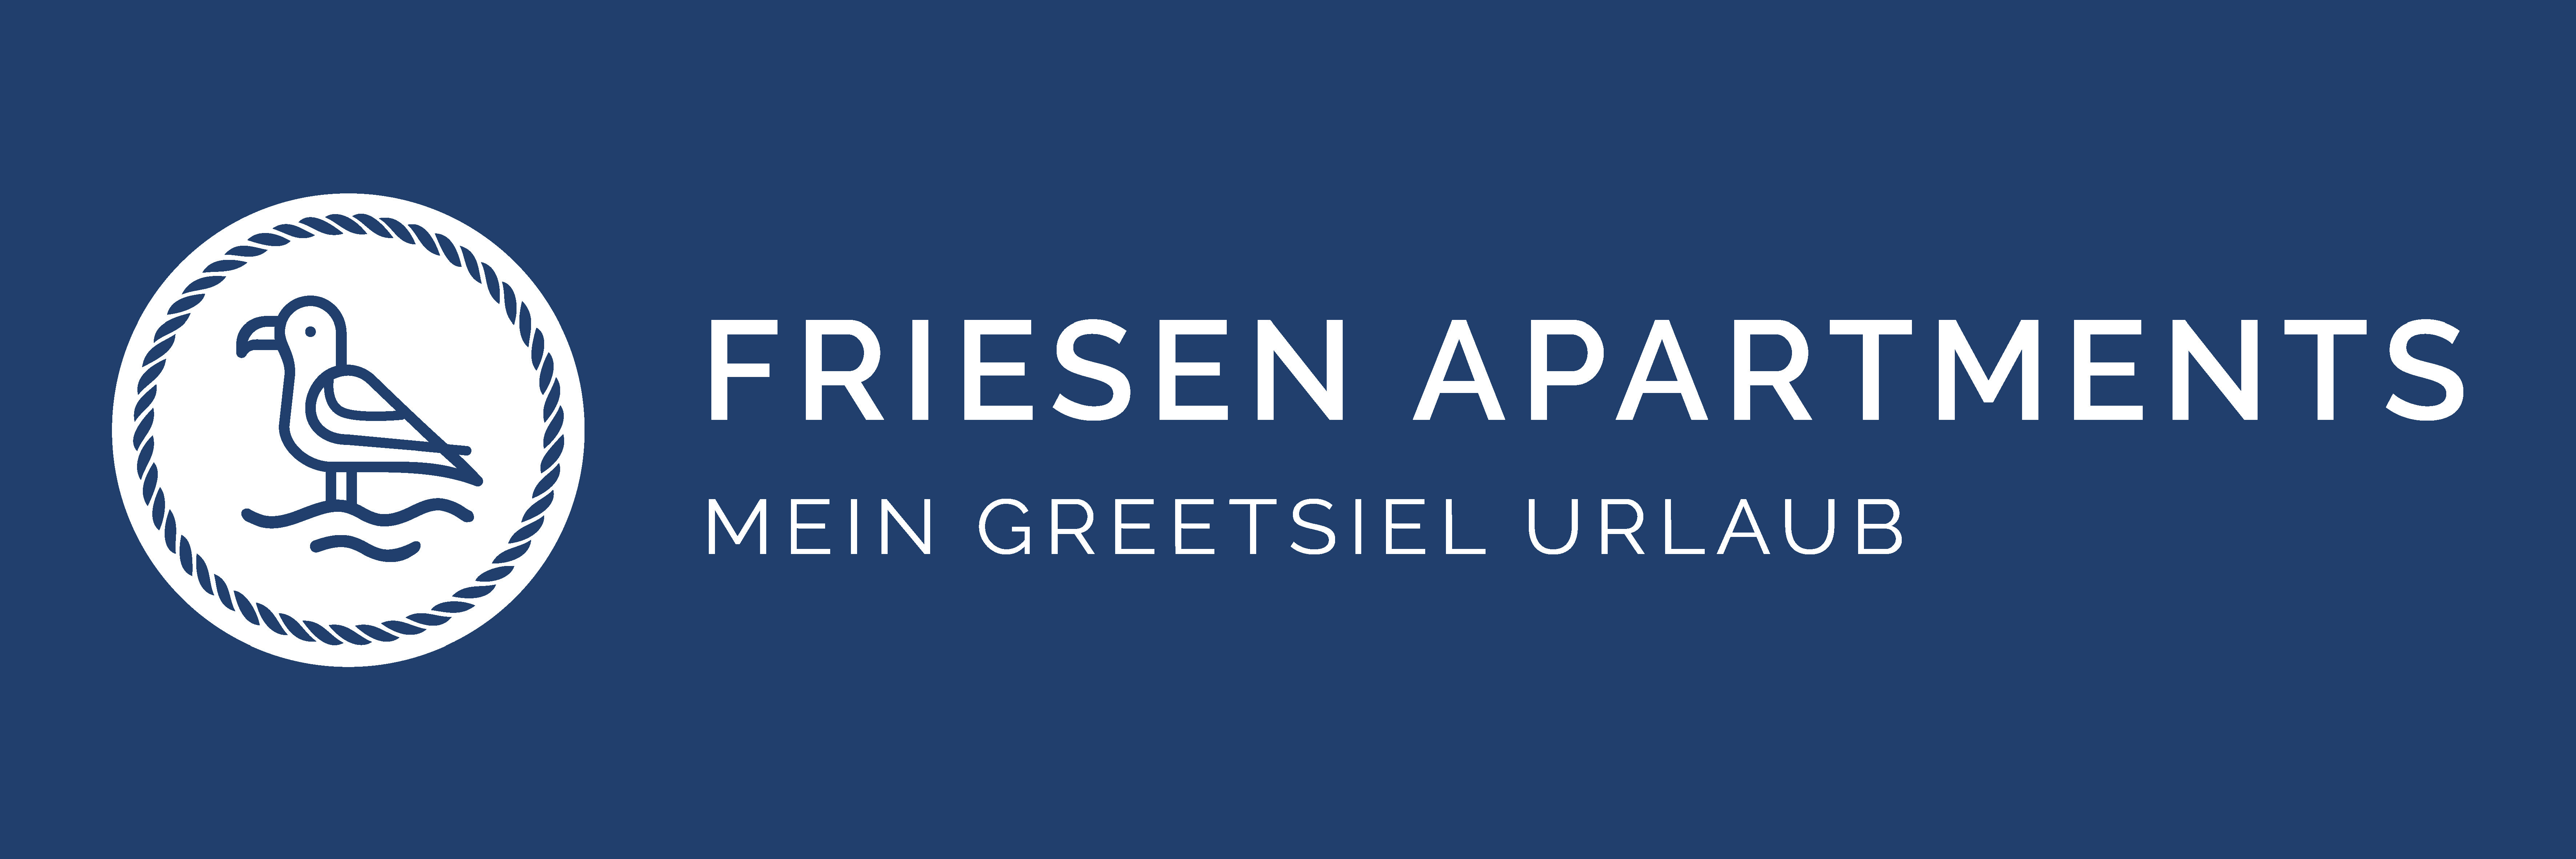 Friesen Apartments GmbH